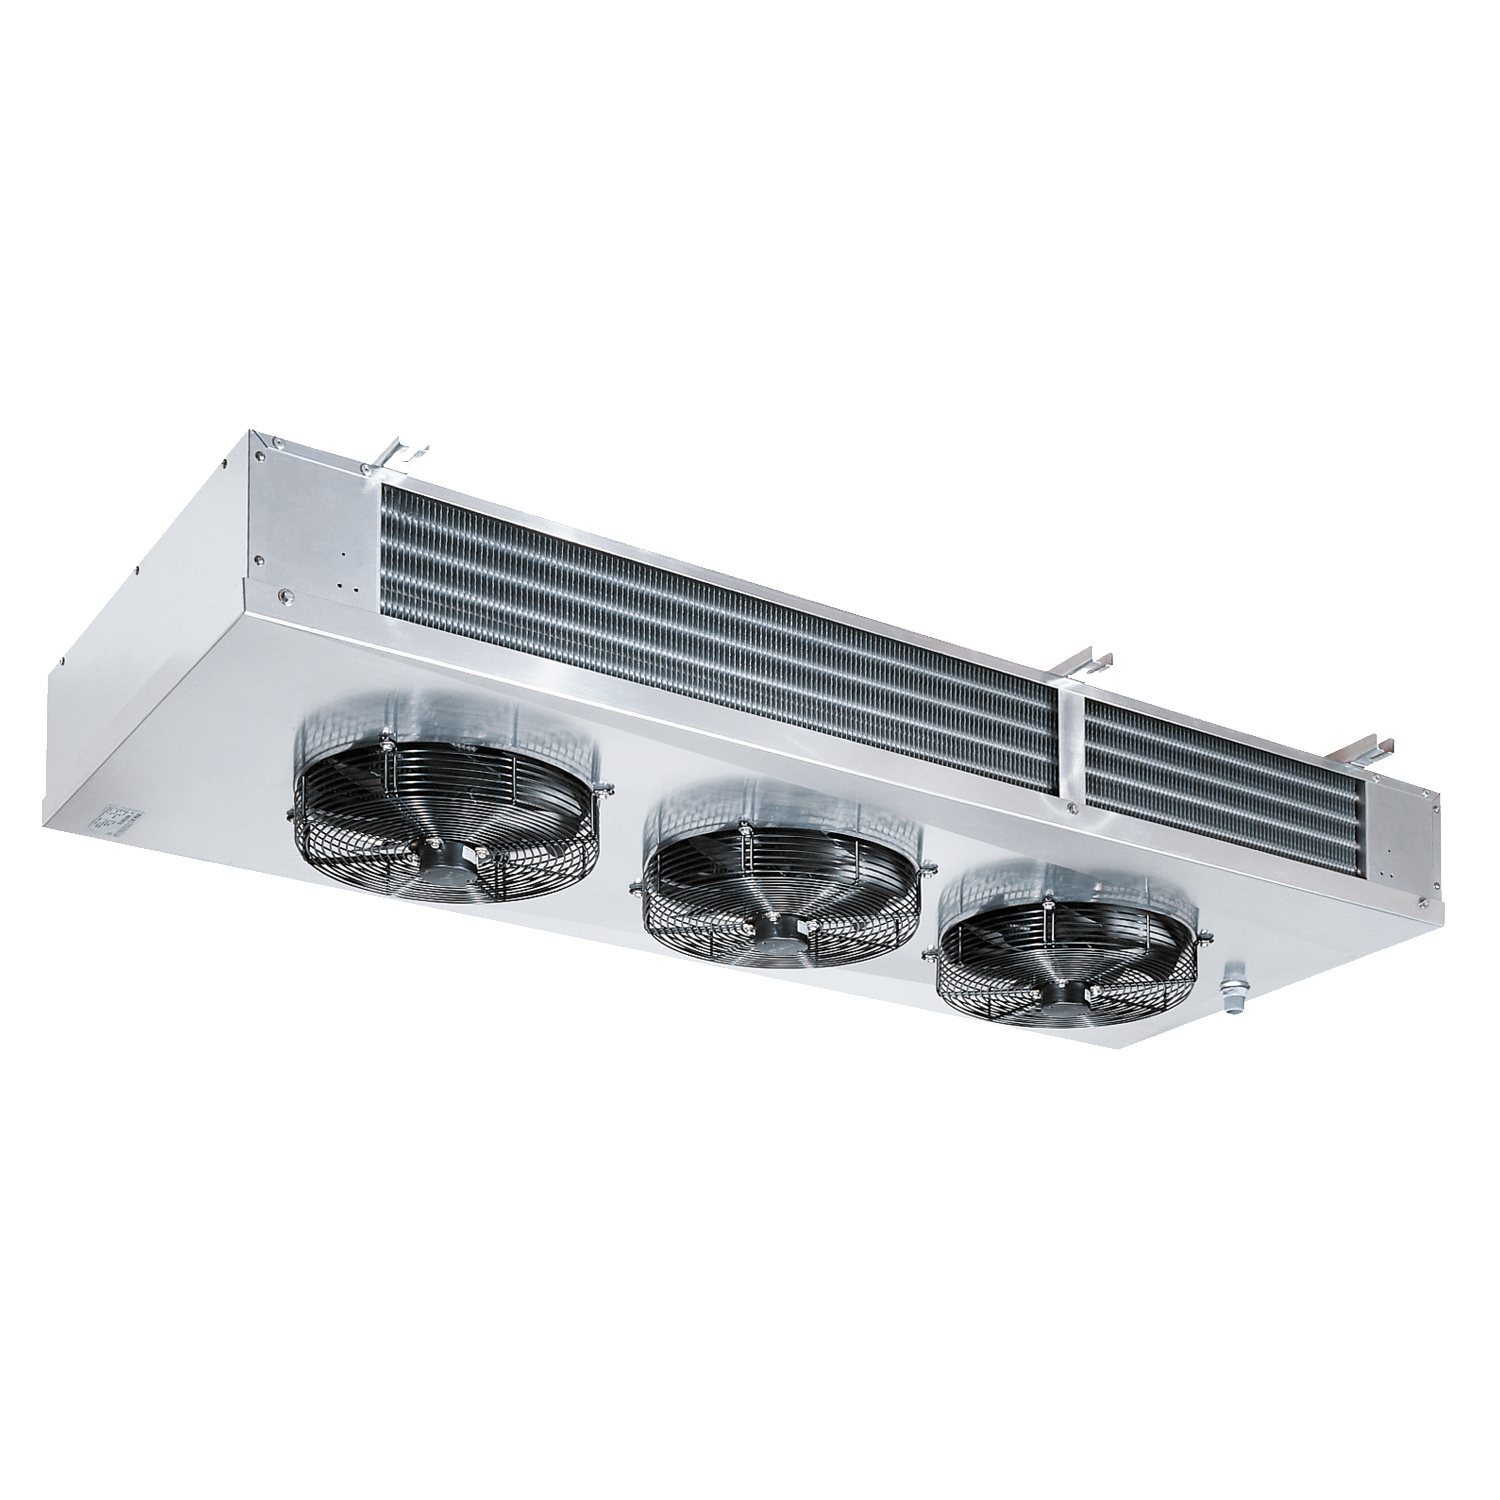 RDFW 350: Cubic ceiling evaporator Glycol evaporator